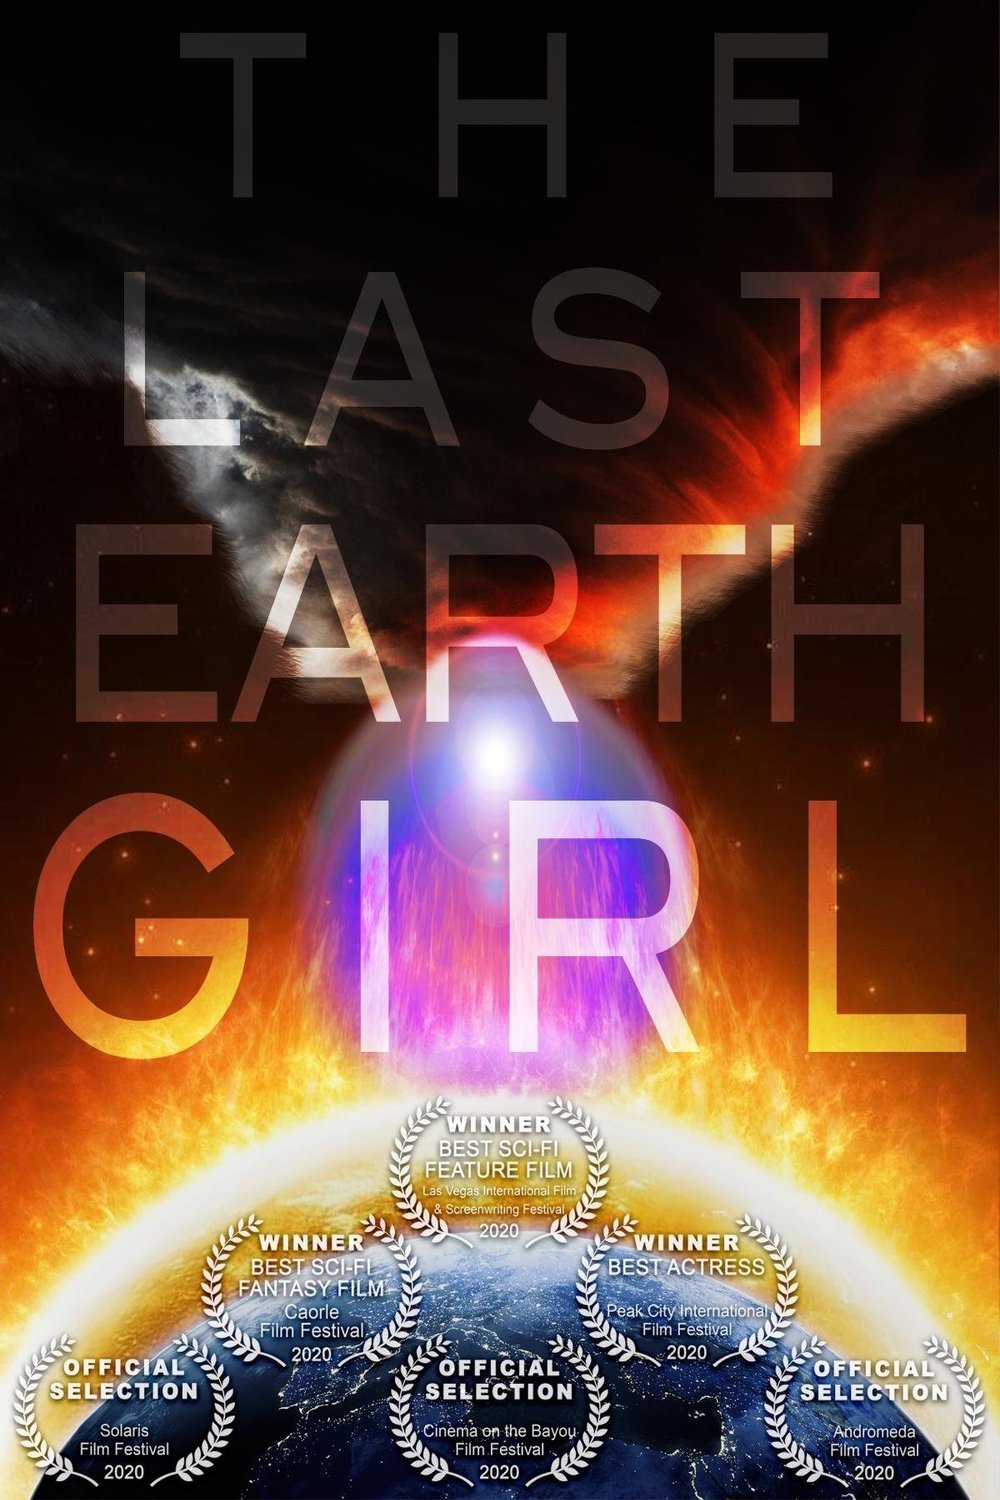 L'affiche du film The Last Earth Girl